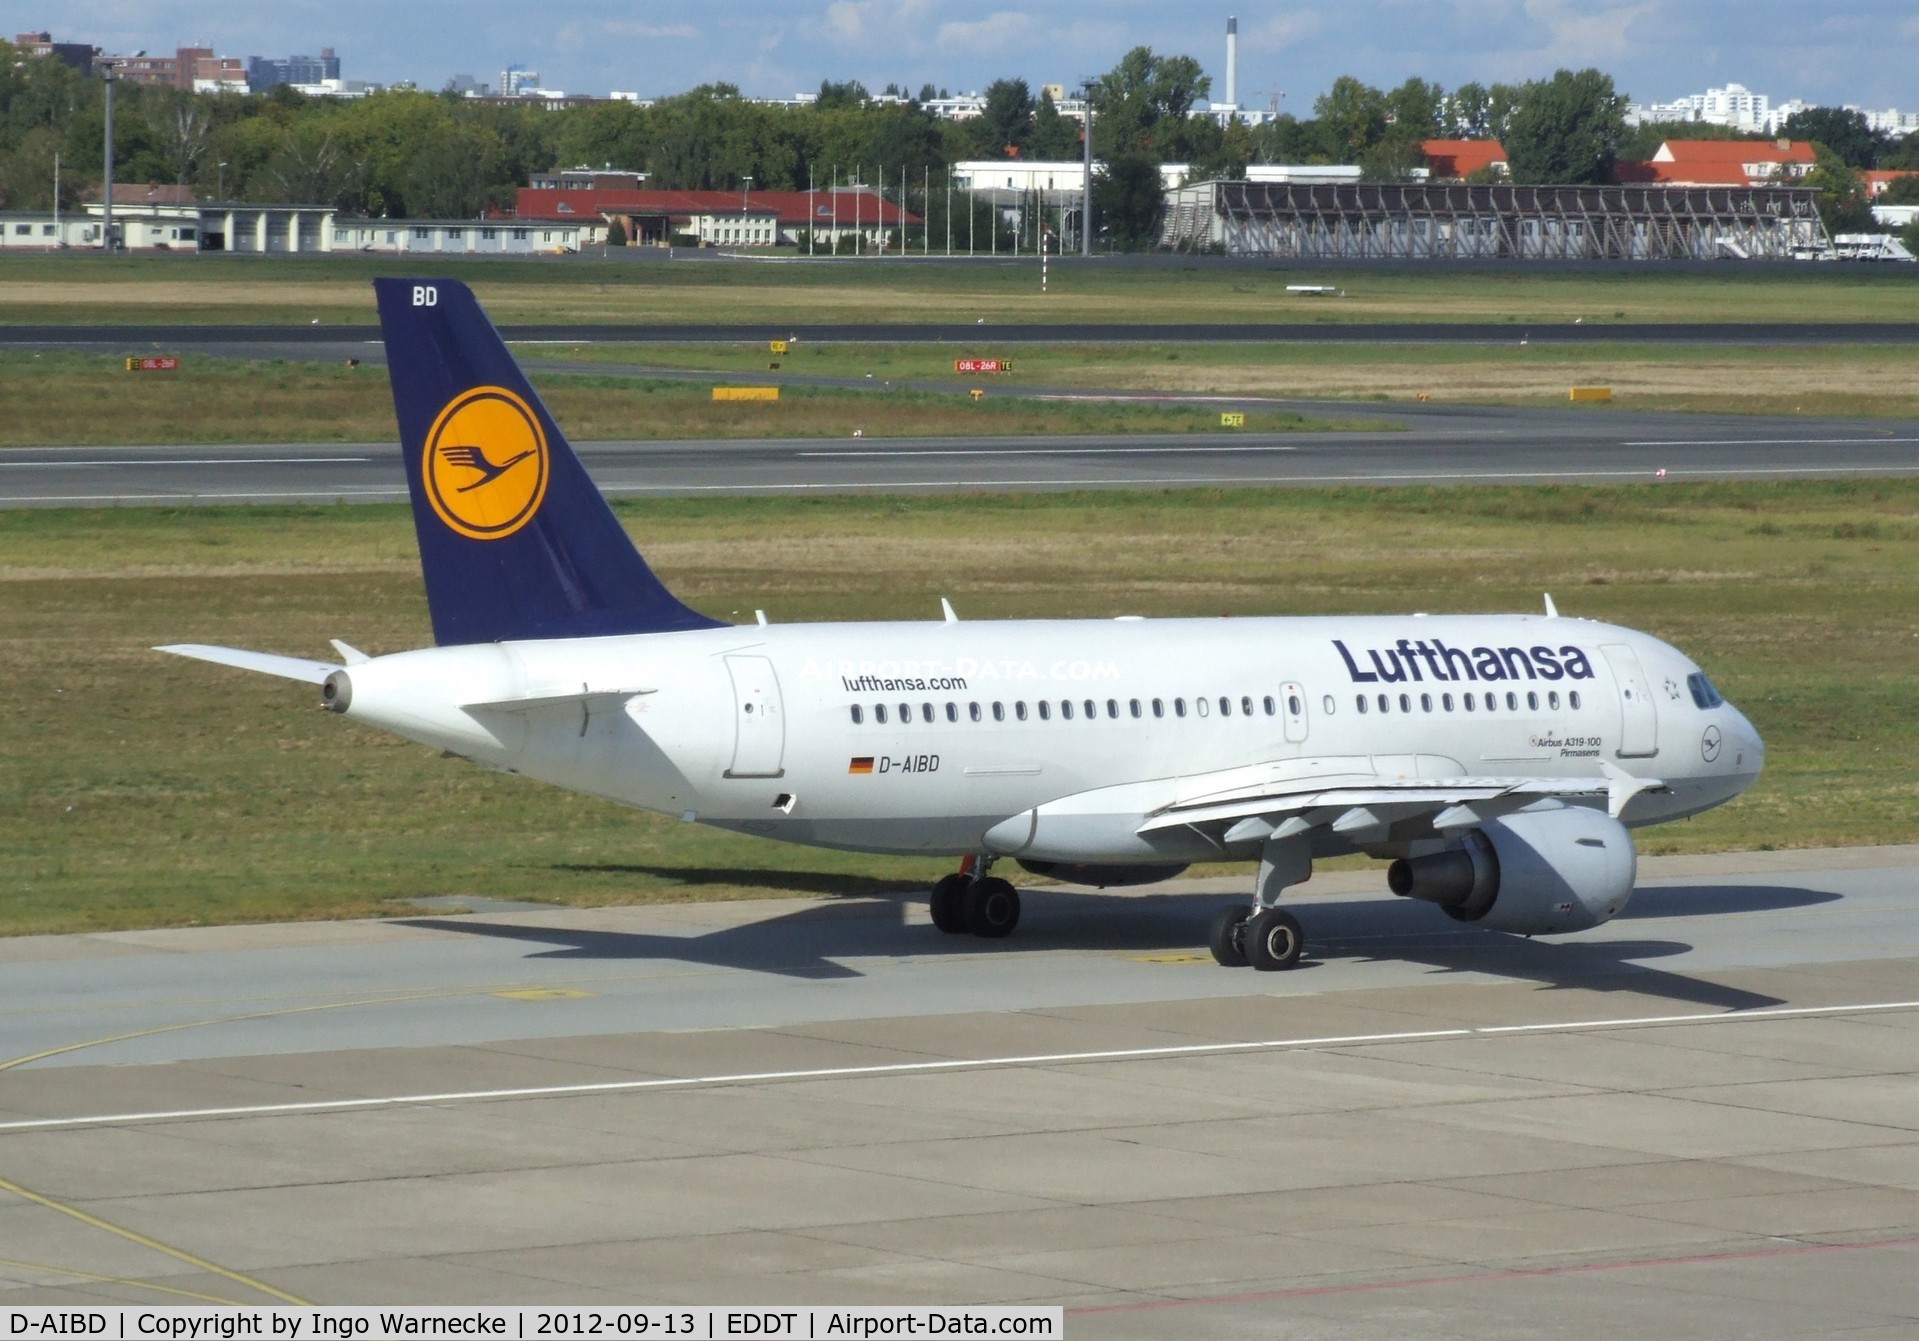 D-AIBD, 2010 Airbus A319-112 C/N 4455, Airbus A319-112 of Lufthansa at Berlin-Tegel airport